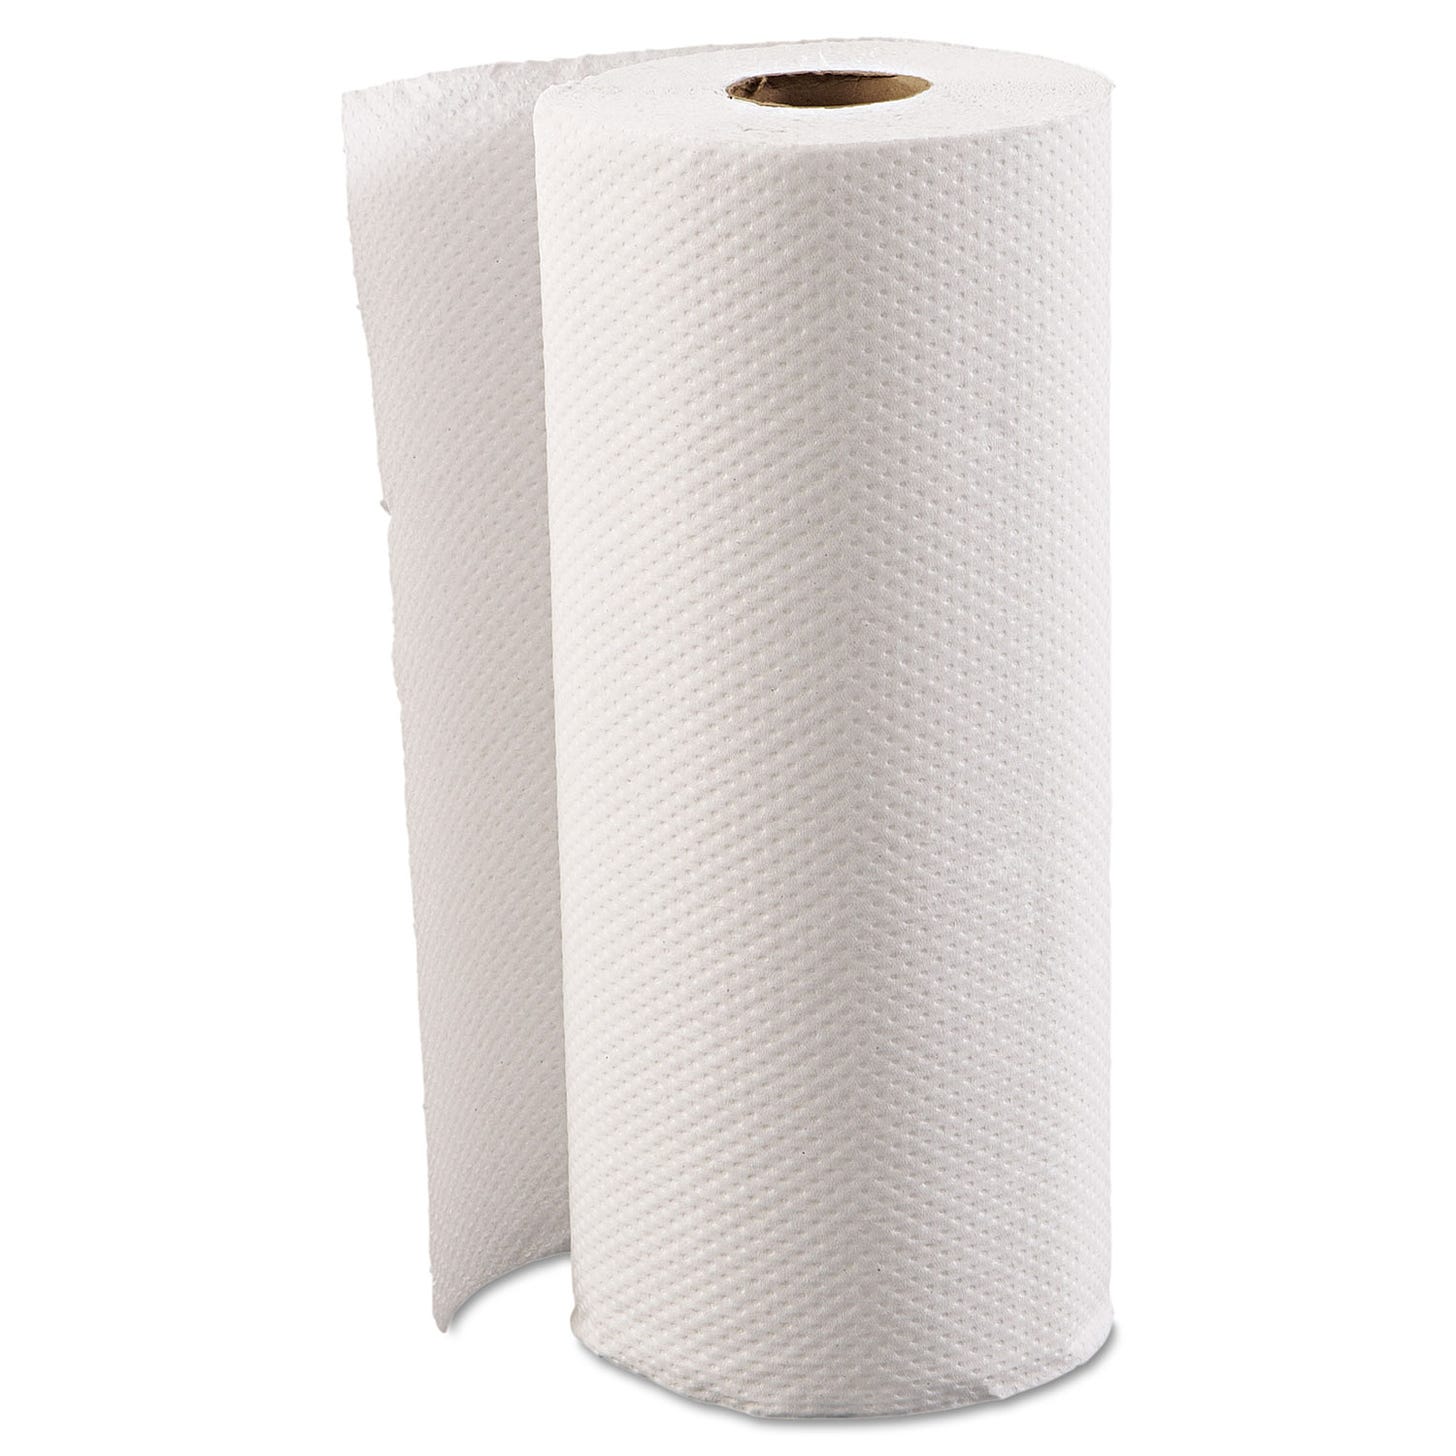 Paper towel roll.